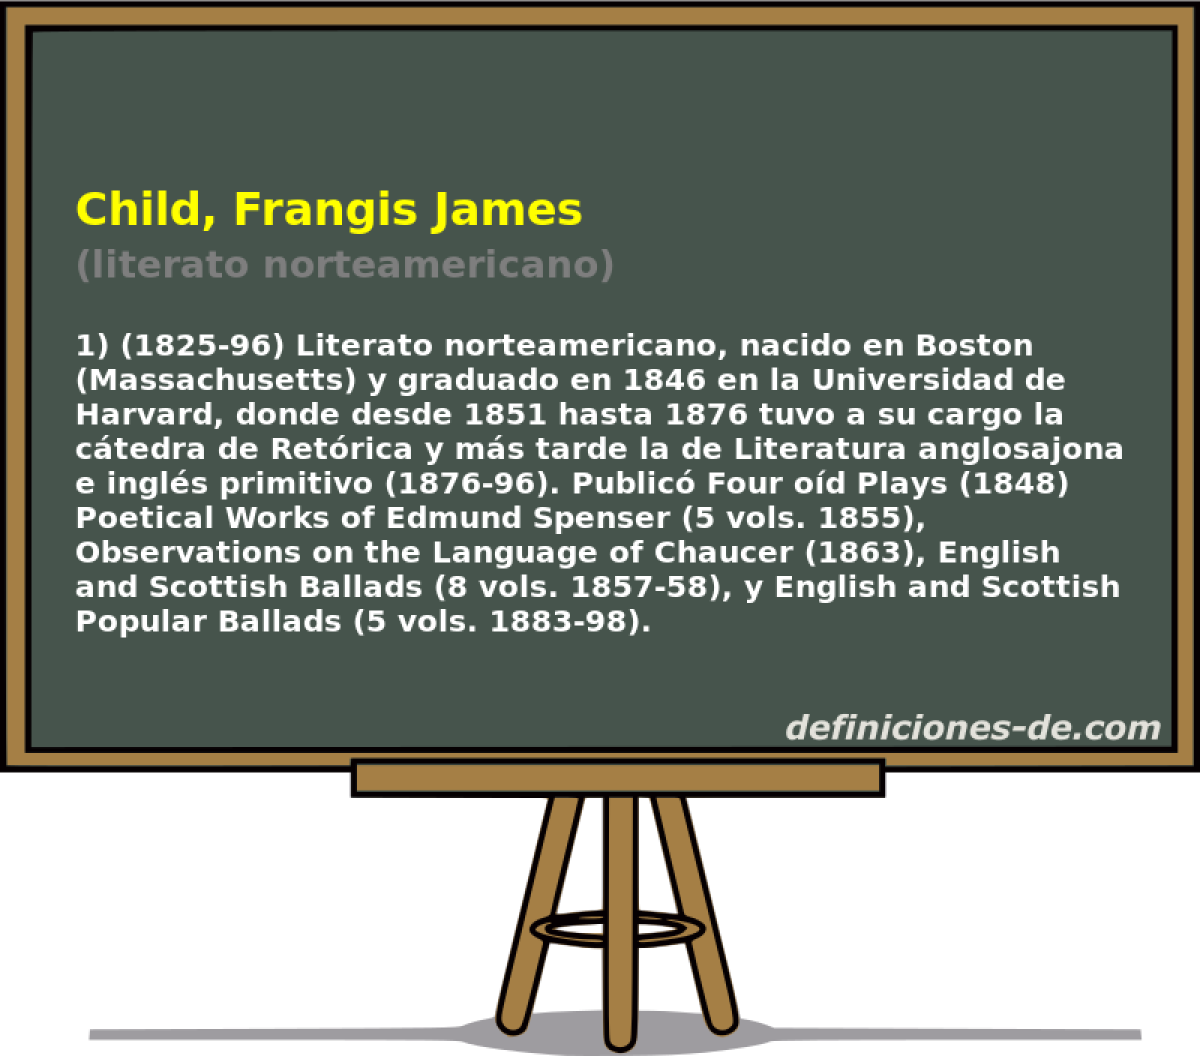 Child, Frangis James (literato norteamericano)